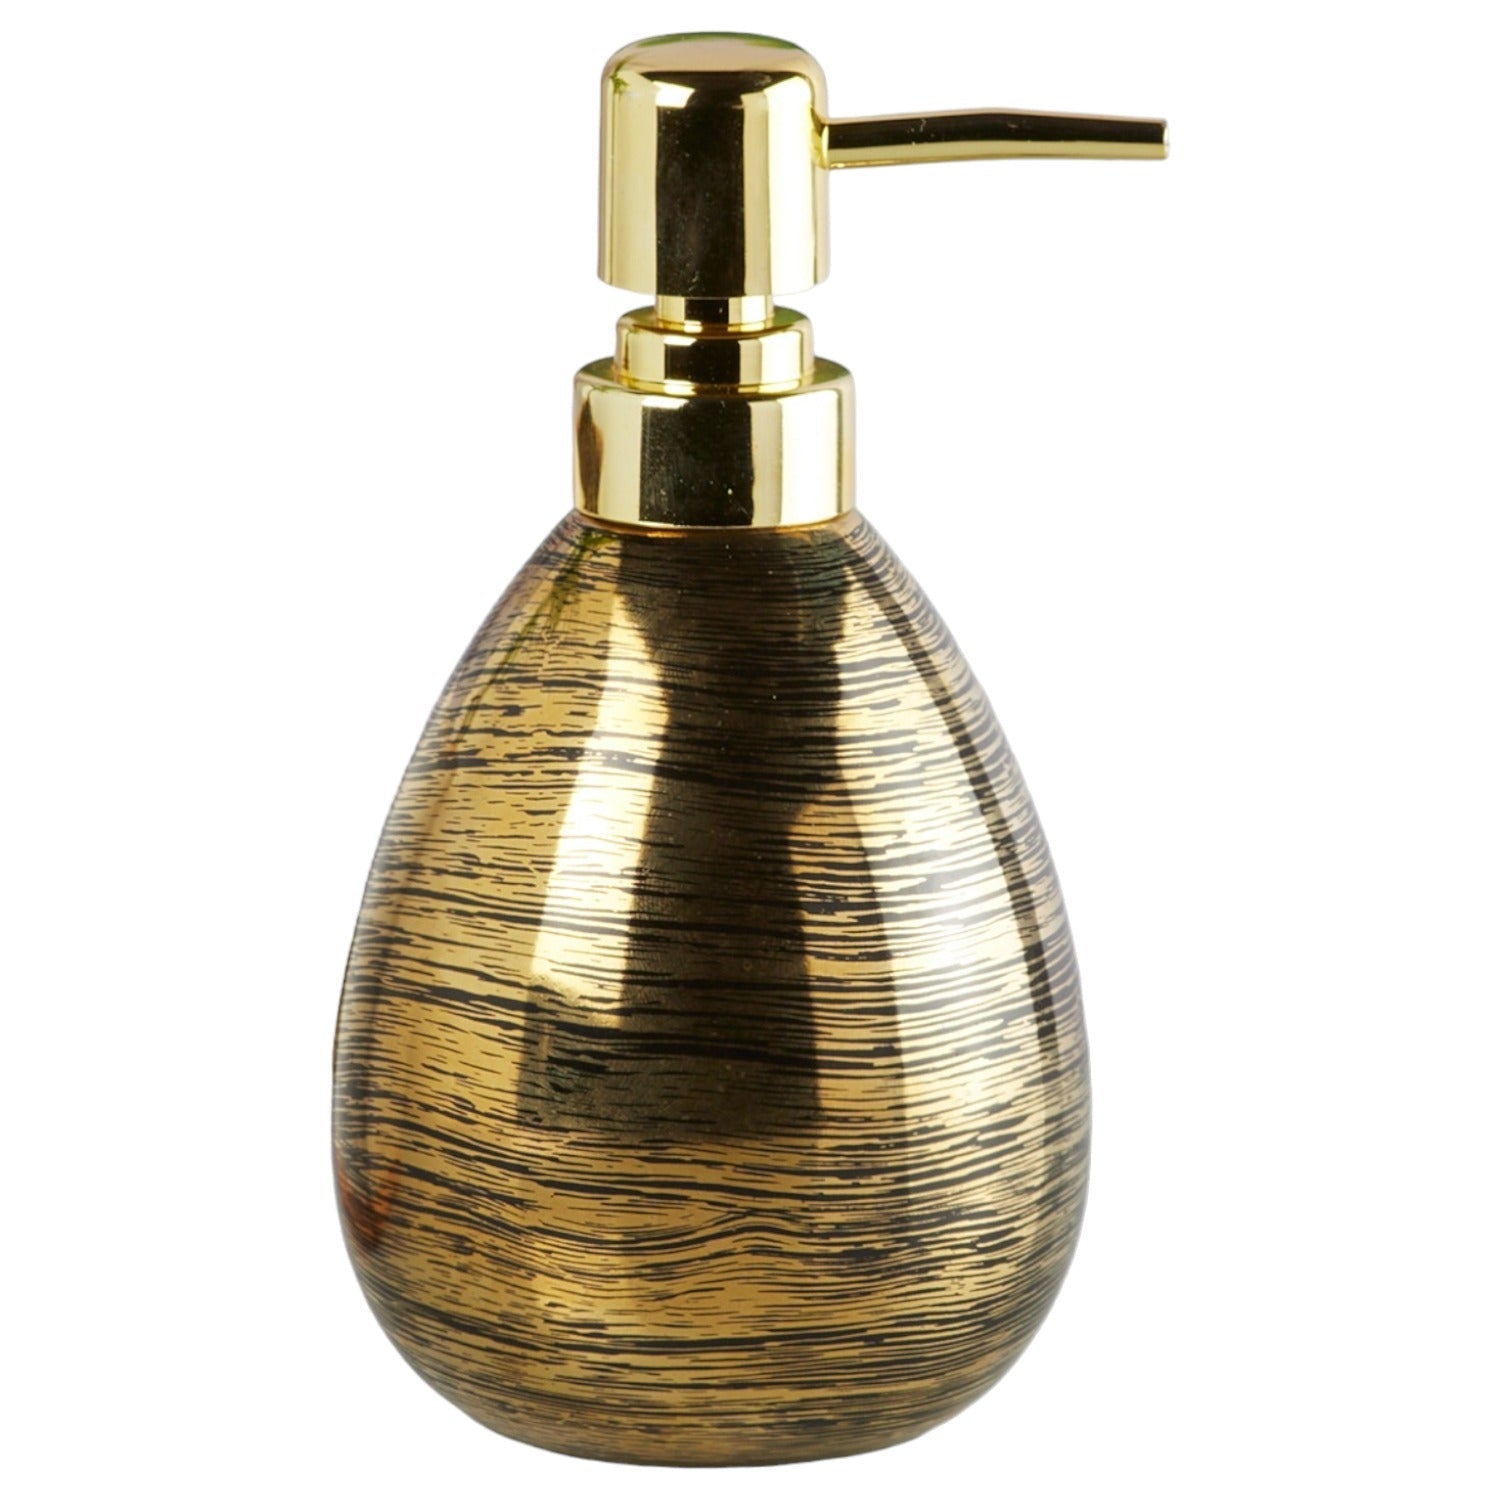 Ceramic Soap Dispenser handwash Pump for Bathroom, Set of 1, Black/Gold (10309)